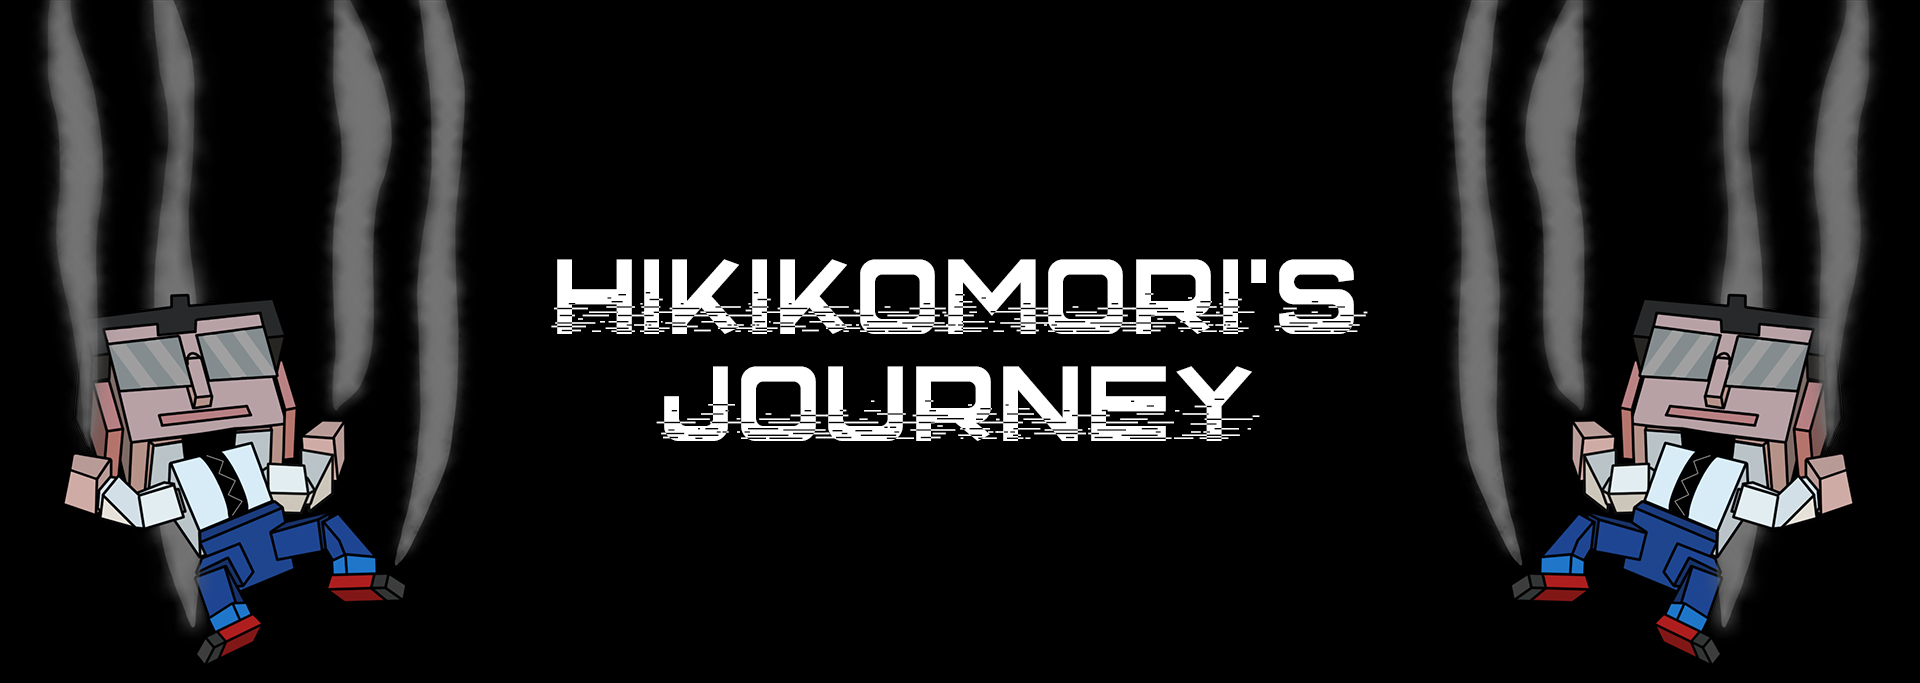 Hikikomori's Journey